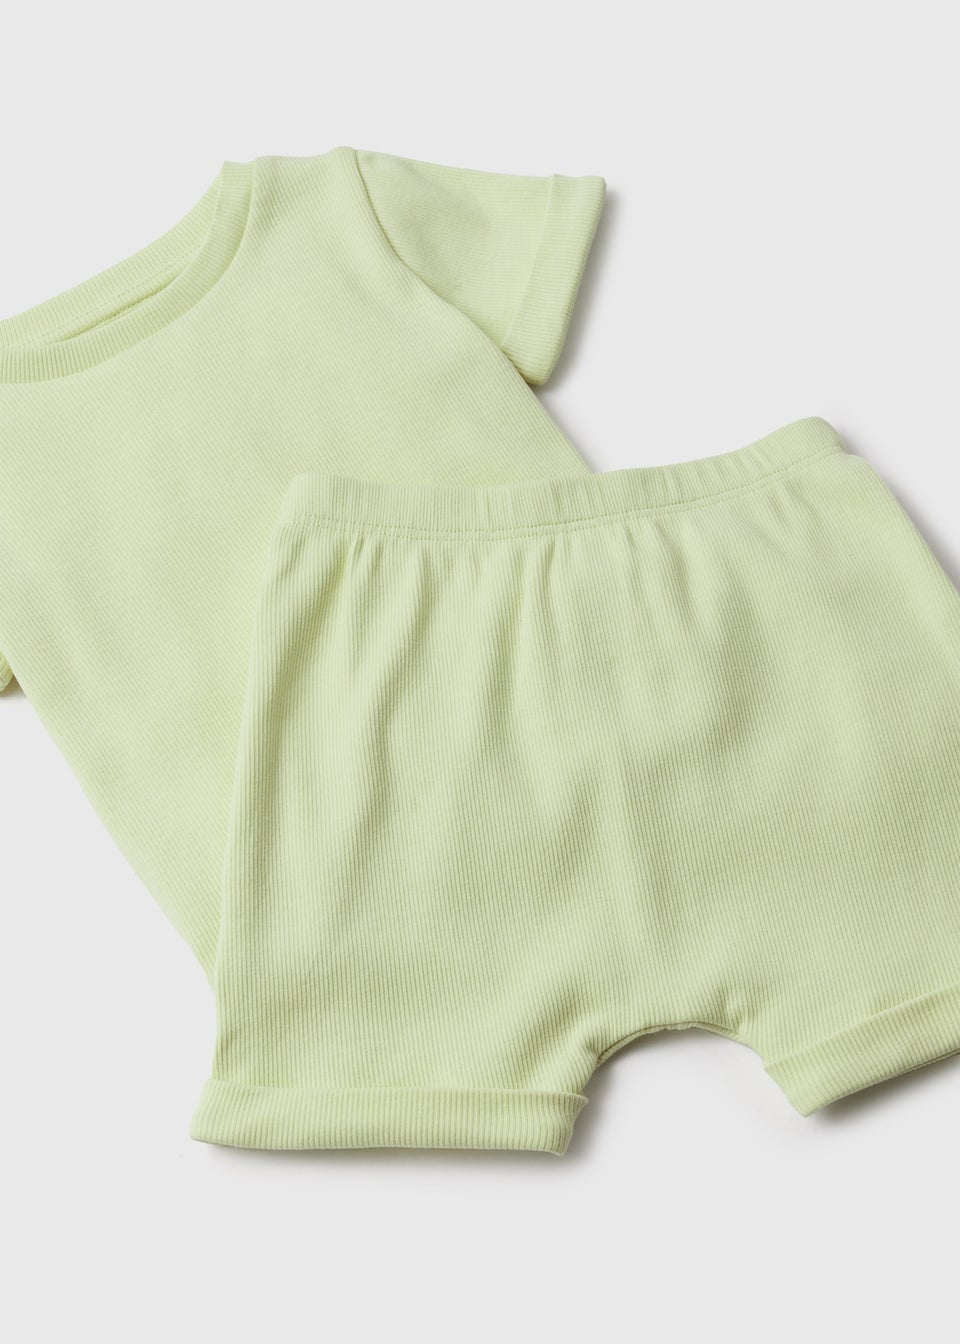 Baby Green Ribbed T-Shirt & Shorts Set (Newborn-23mths)